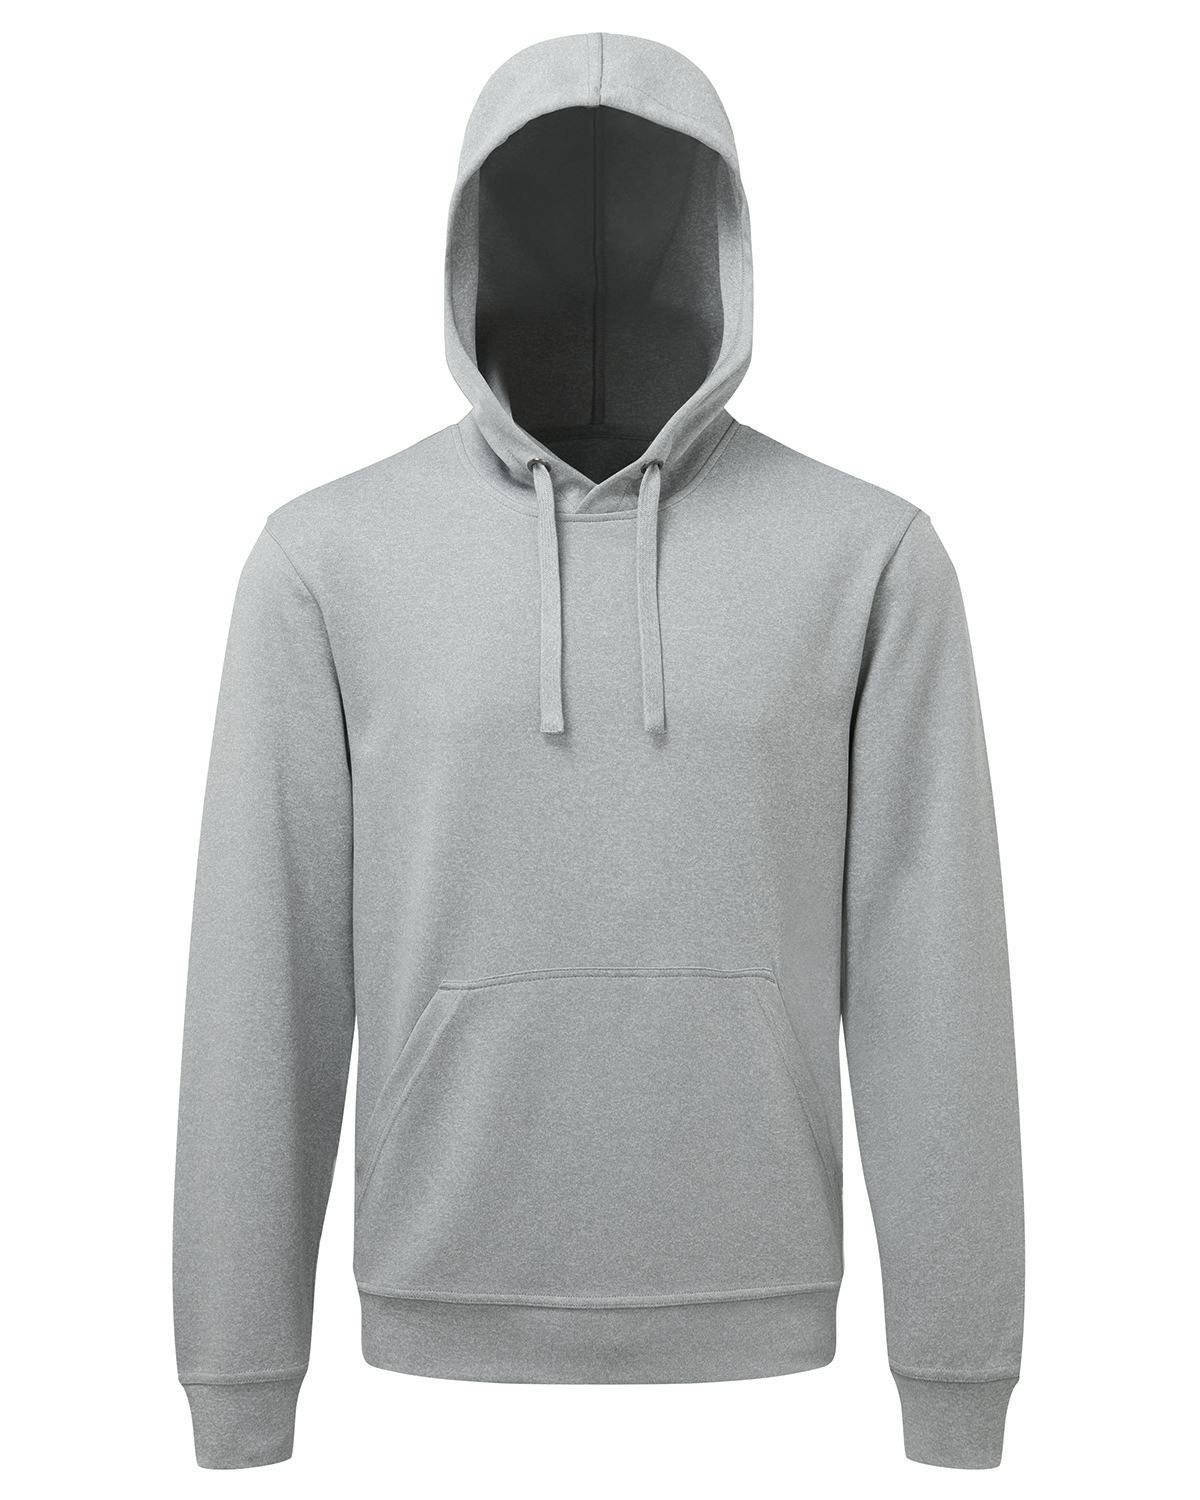 Image for Unisex Spun Dyed Hooded Sweatshirt